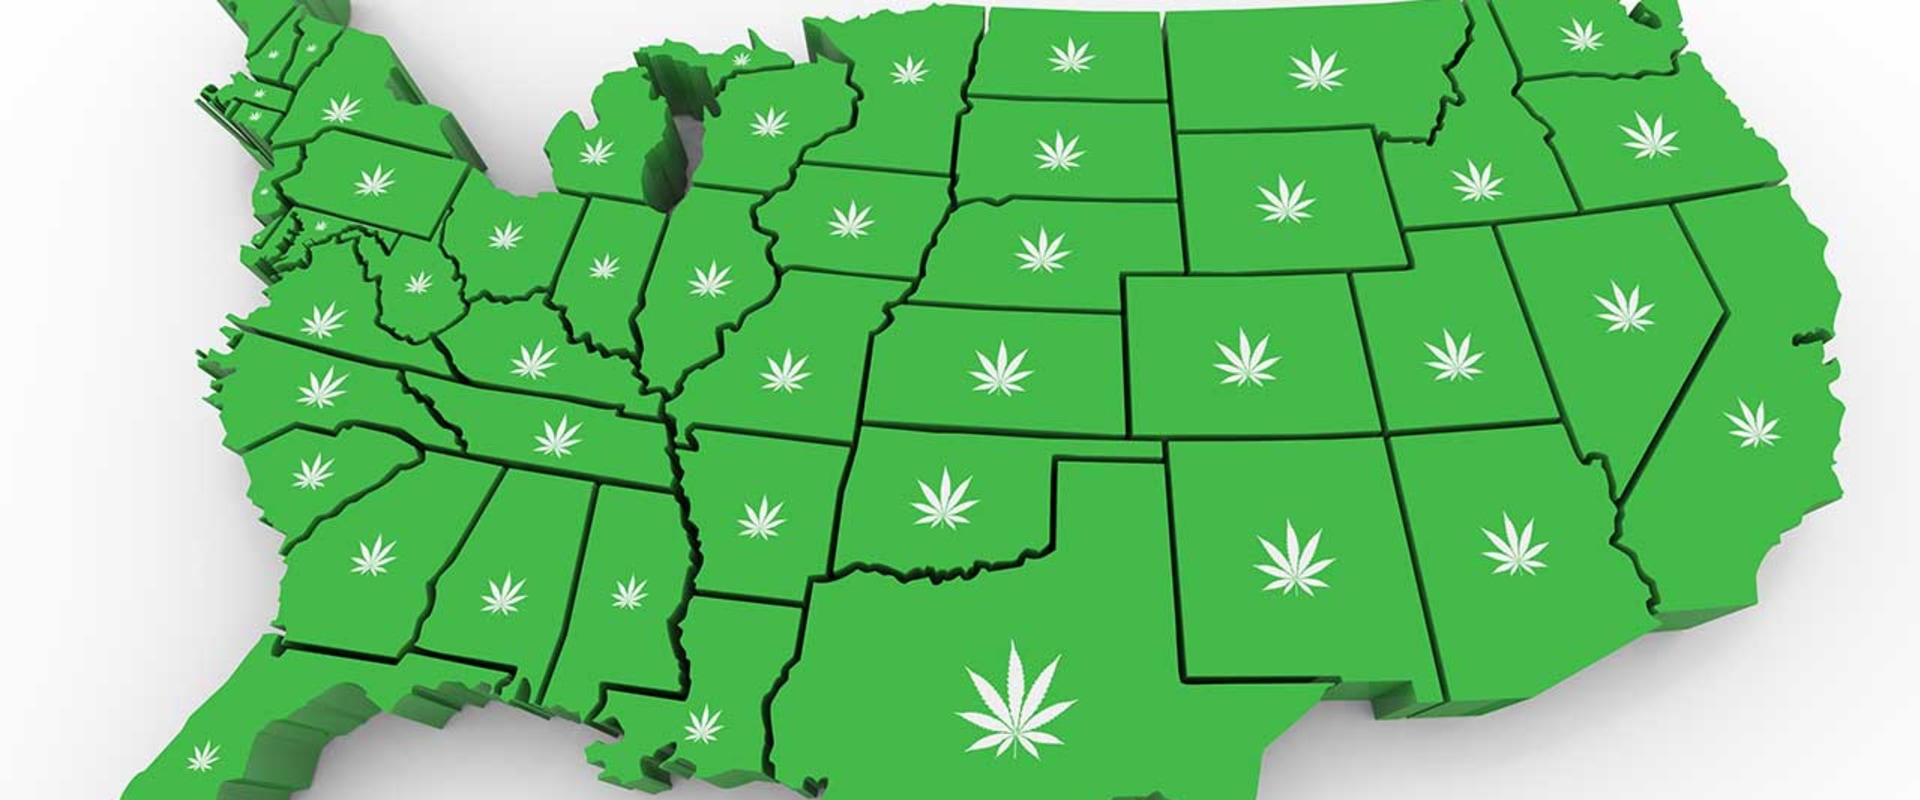 What states have legalized marijuanas?